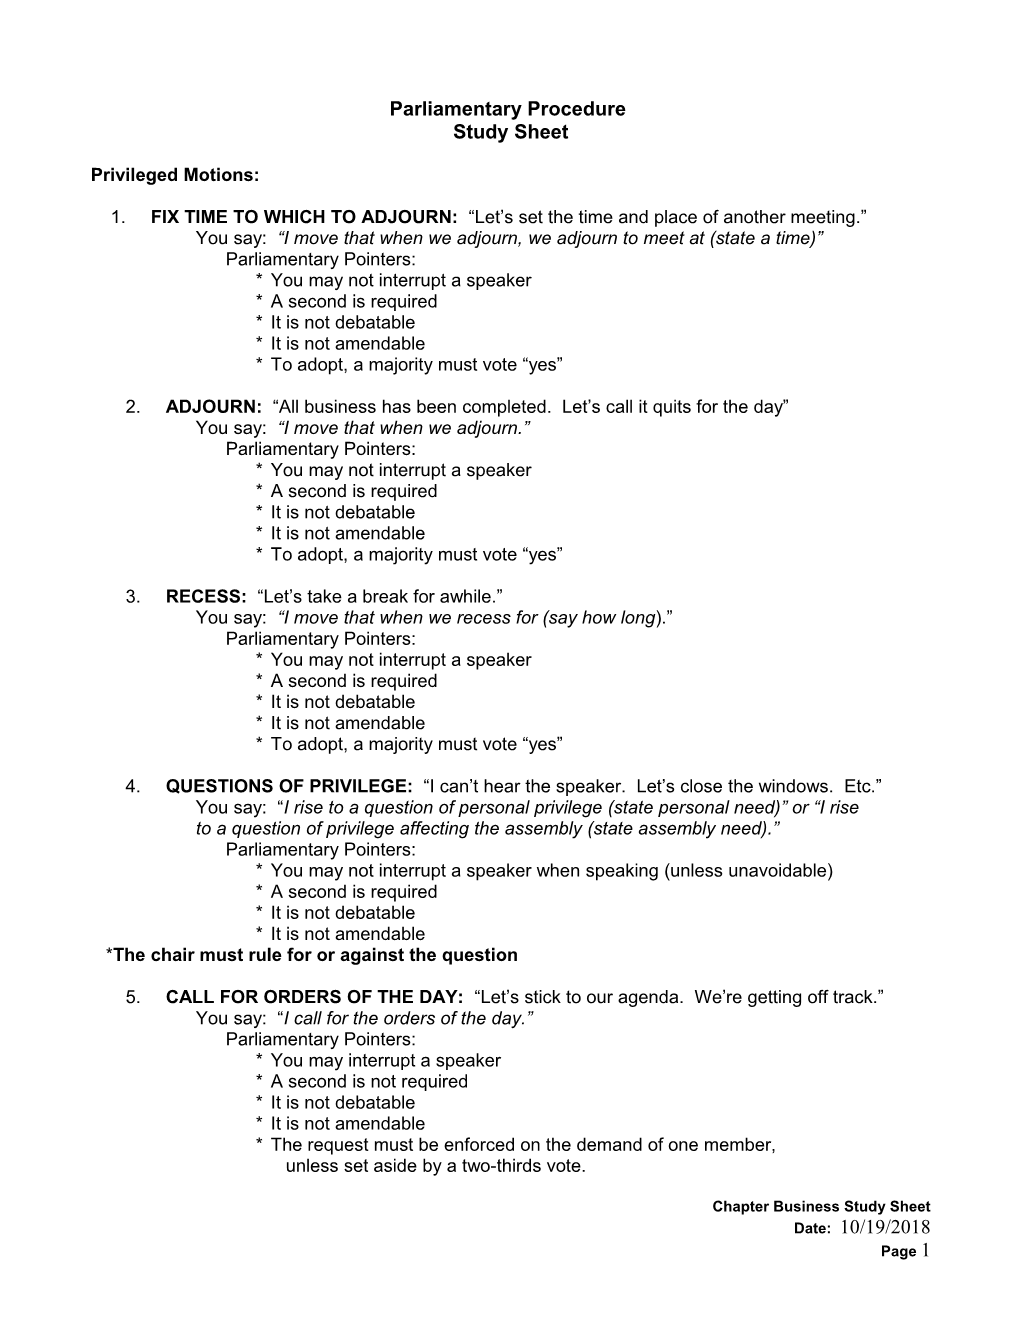 Chapter Buisness Study Sheet